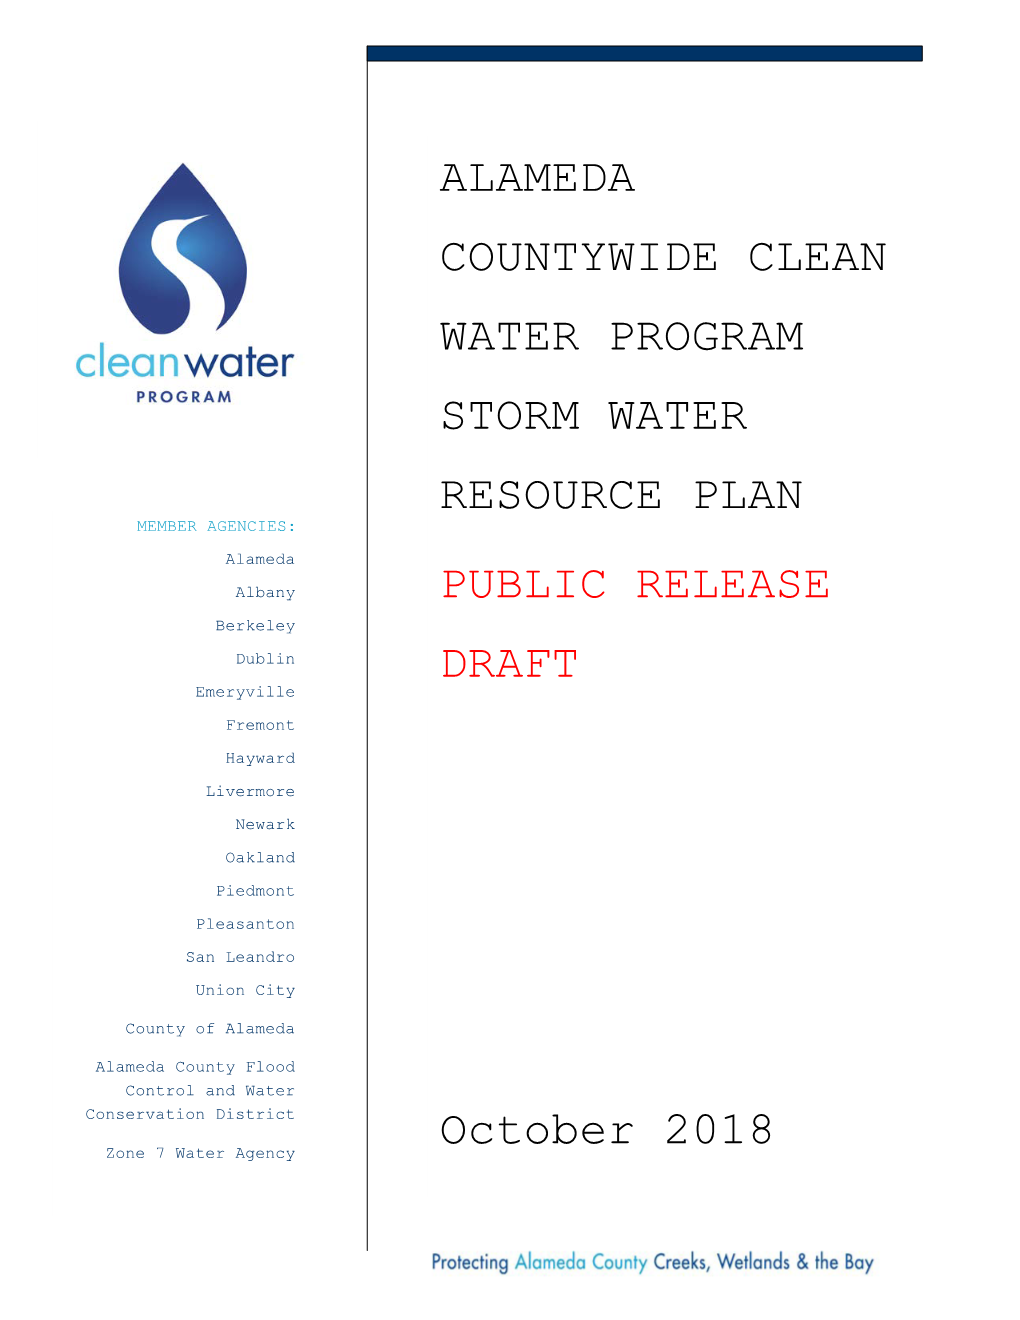 Alameda Countywide Clean Water Program Stormwater Resource Plan